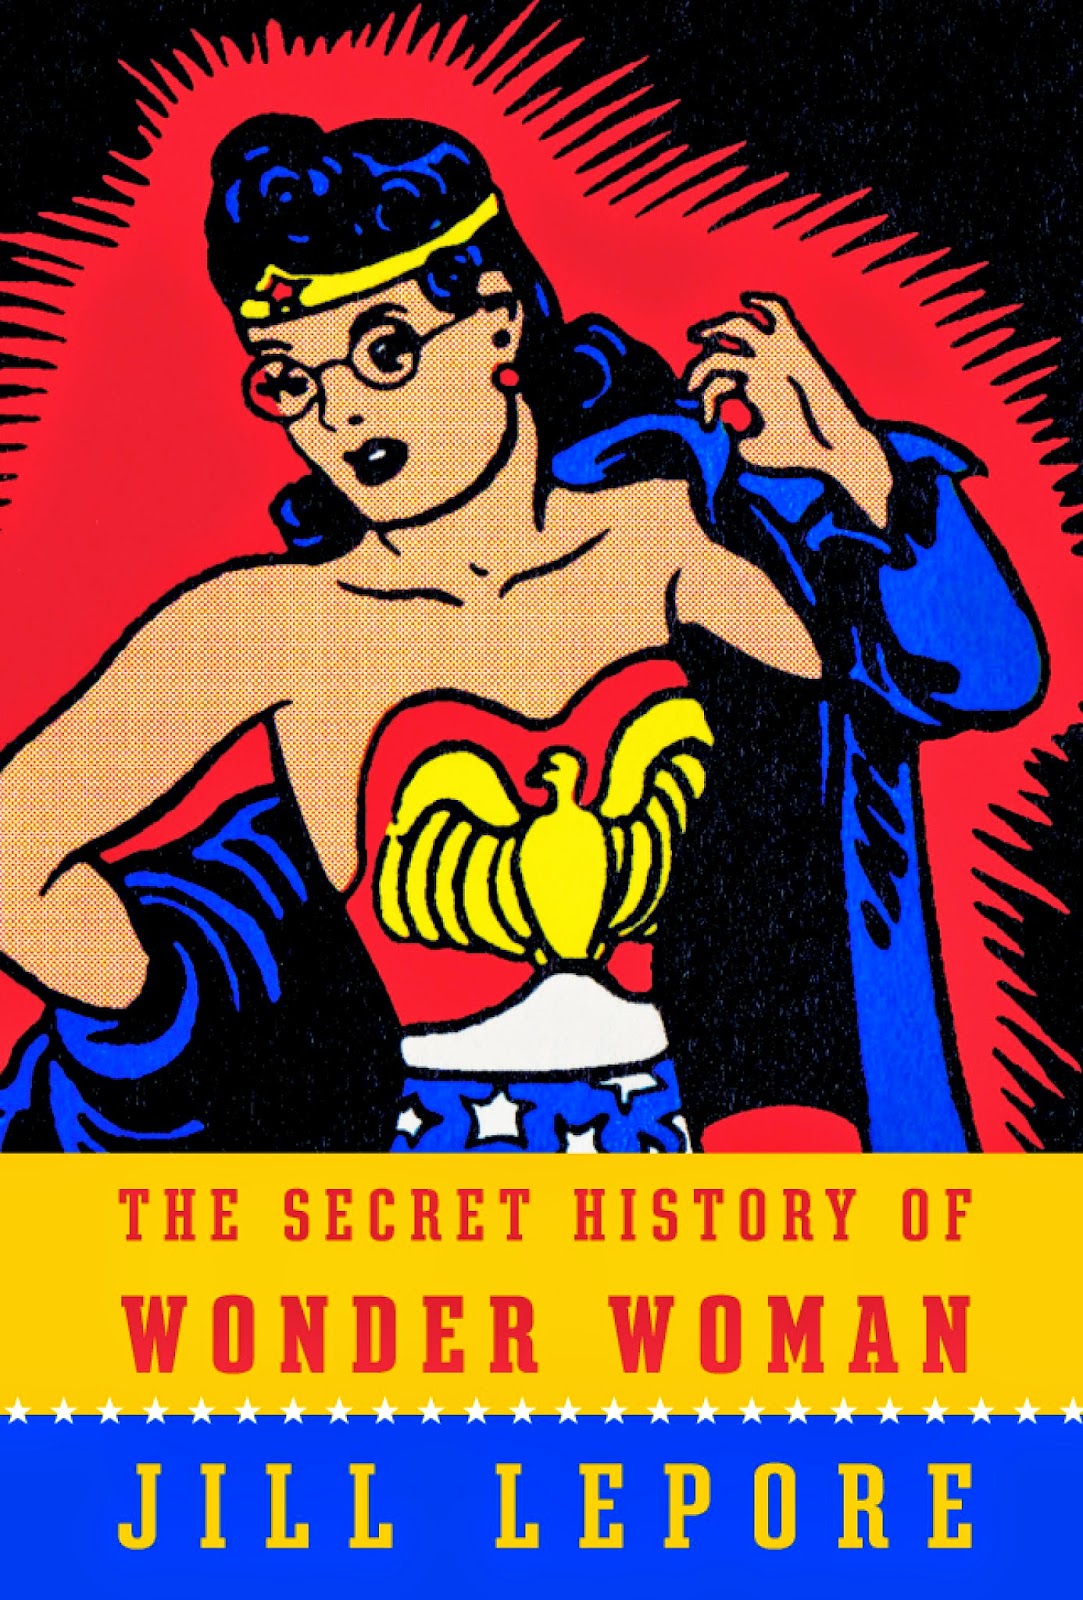 "The Secret History of Wonder Woman"